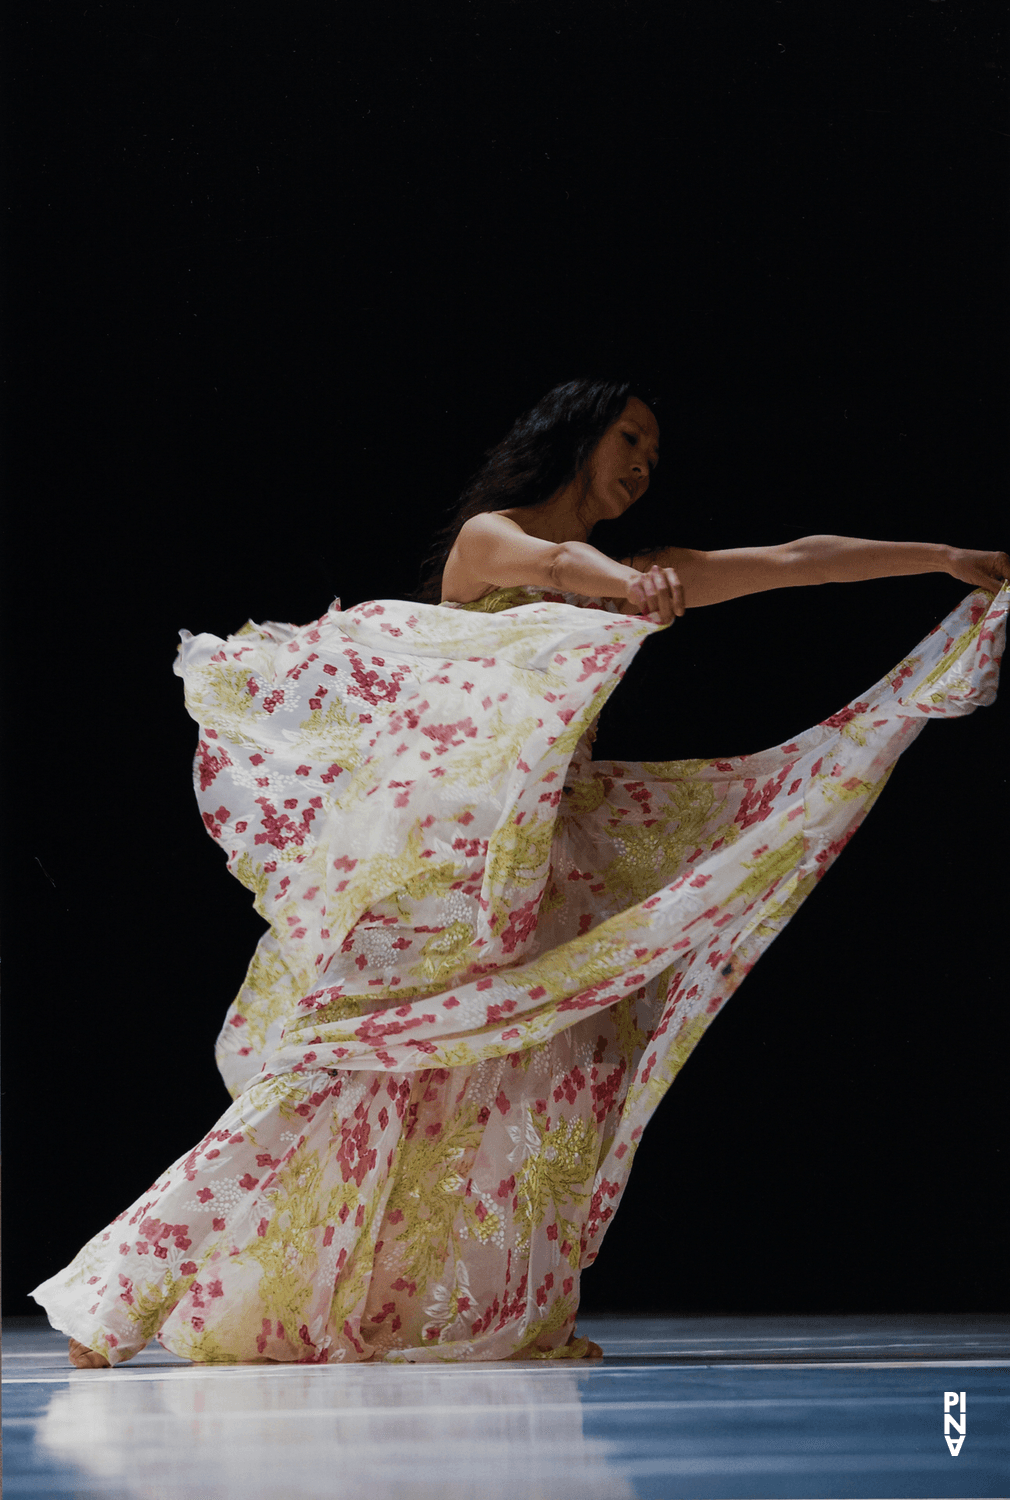 Nayoung Kim in “"... como el musguito en la piedra, ay si, si, si ..." (Like Moss on the Stone)” by Pina Bausch